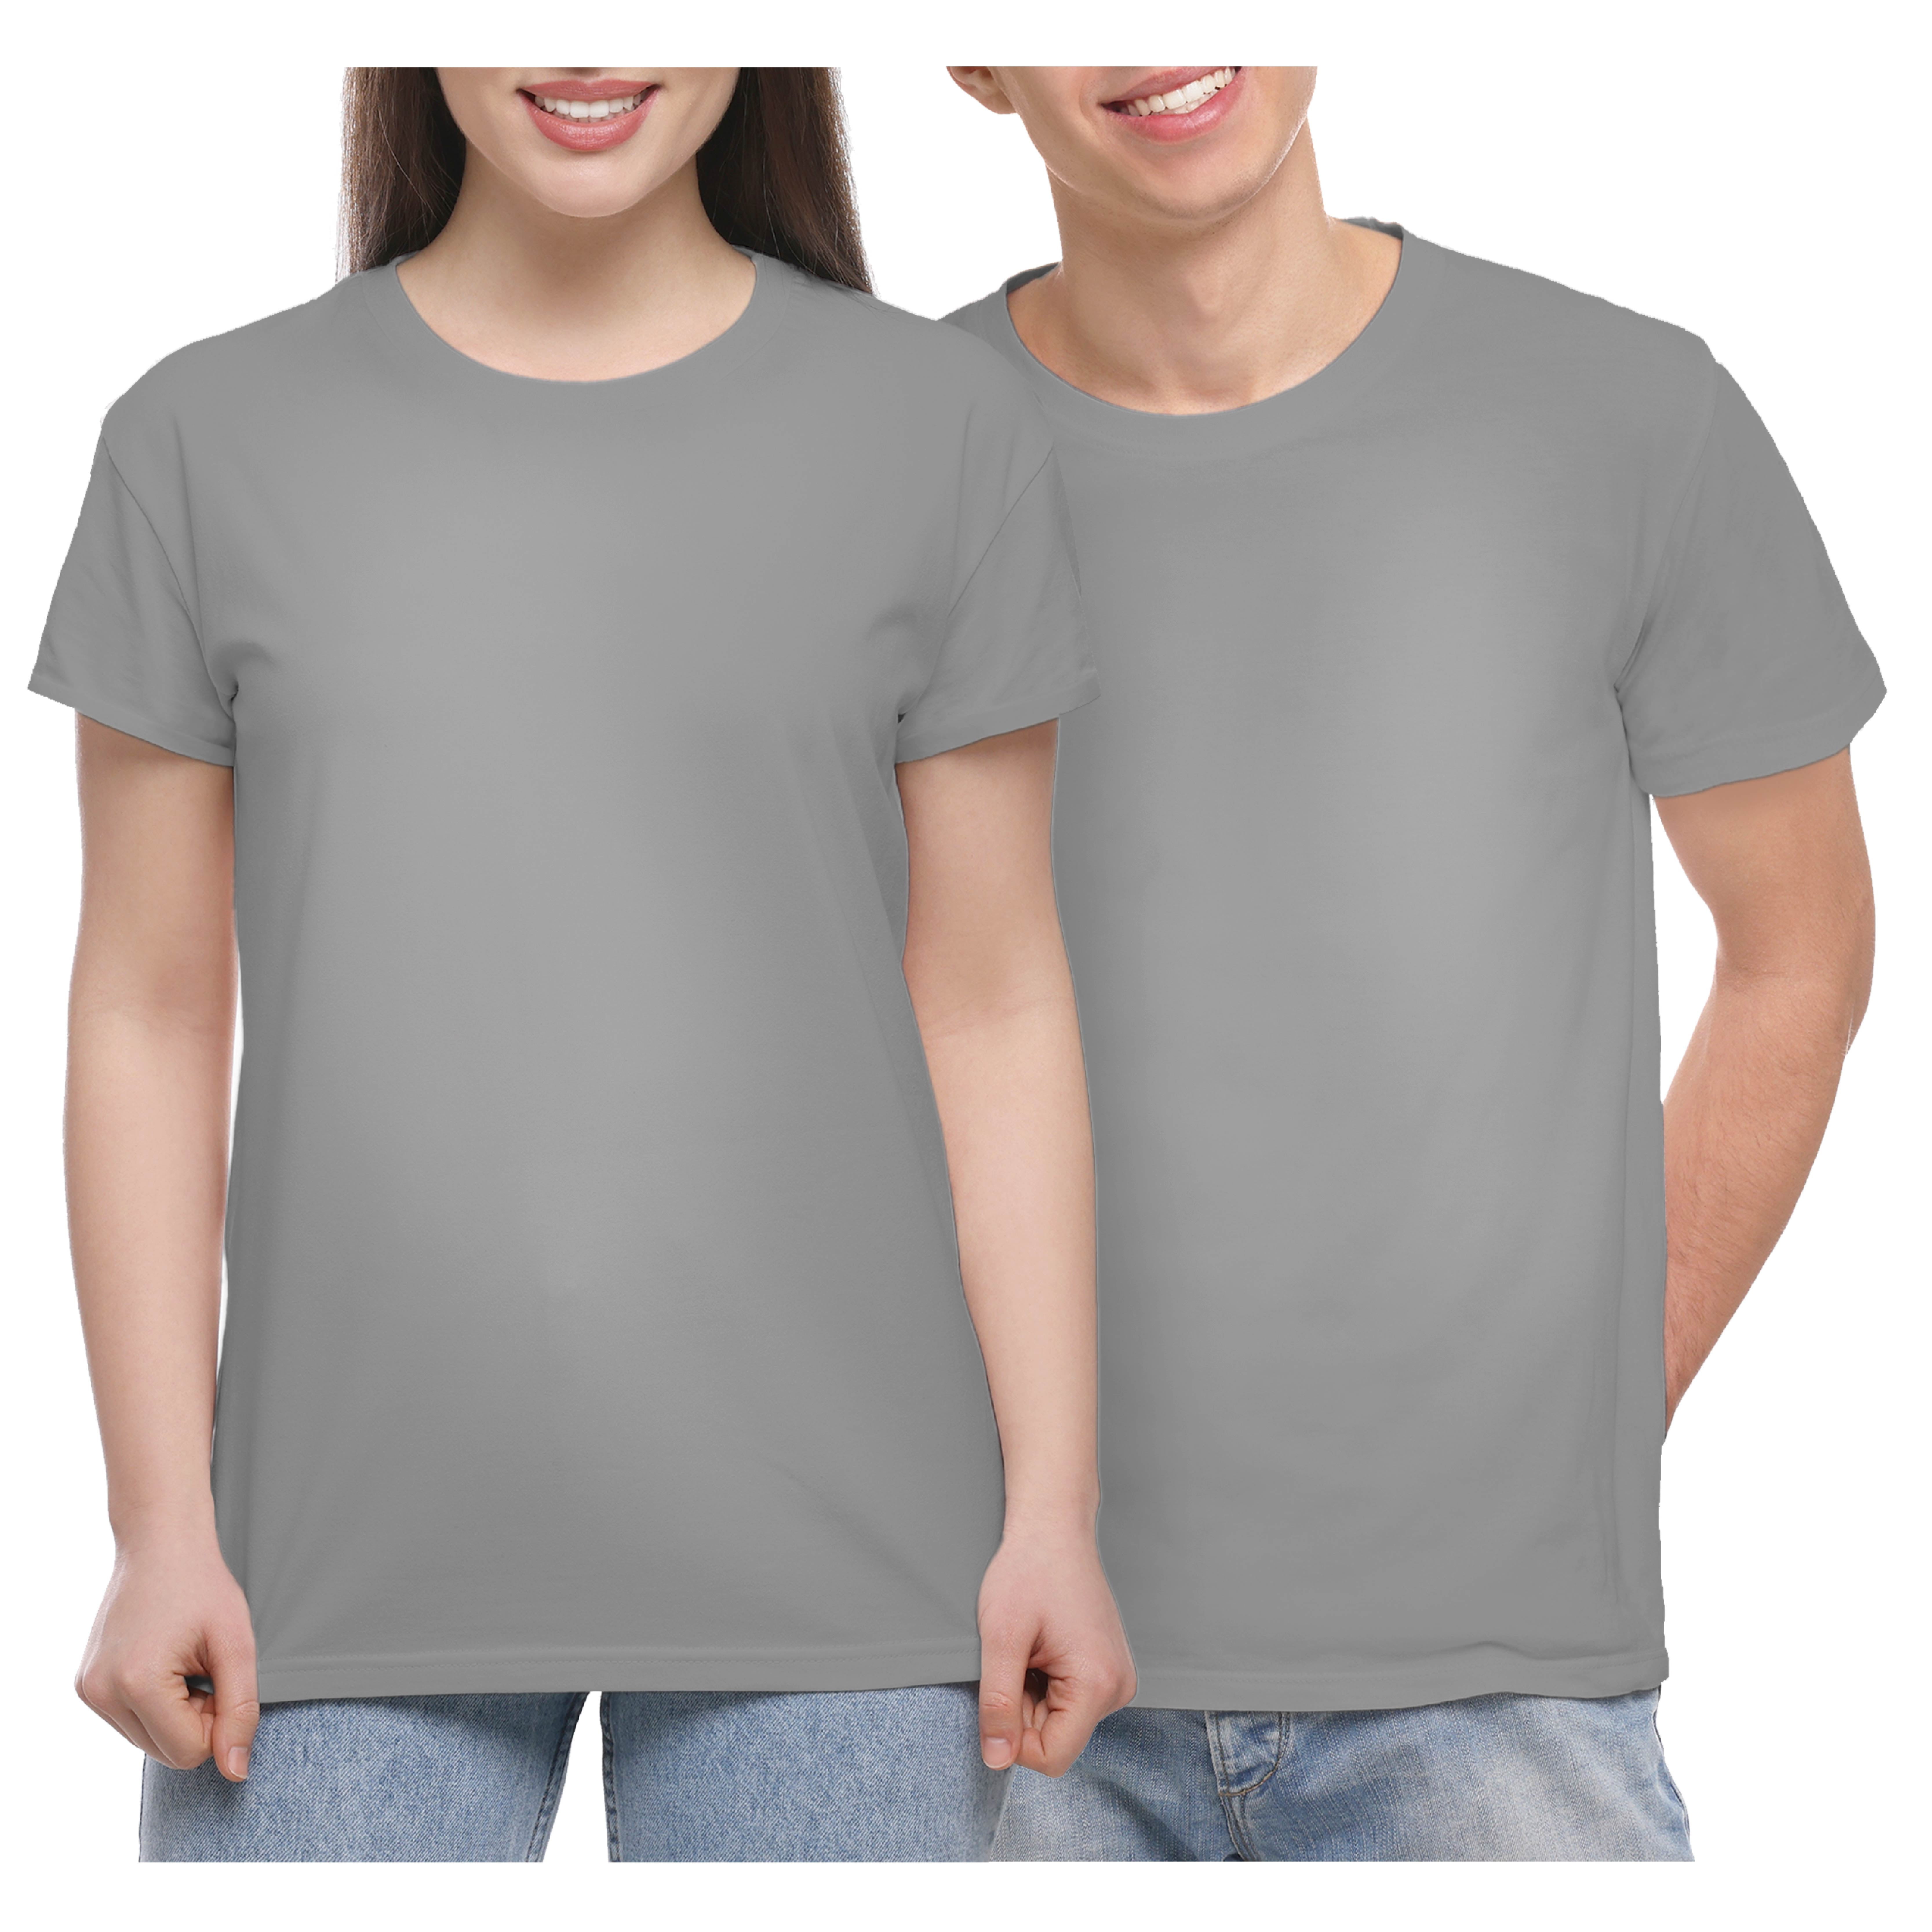  SDN CUSTOM Unisex Grey Kids Polyester Tshirts for